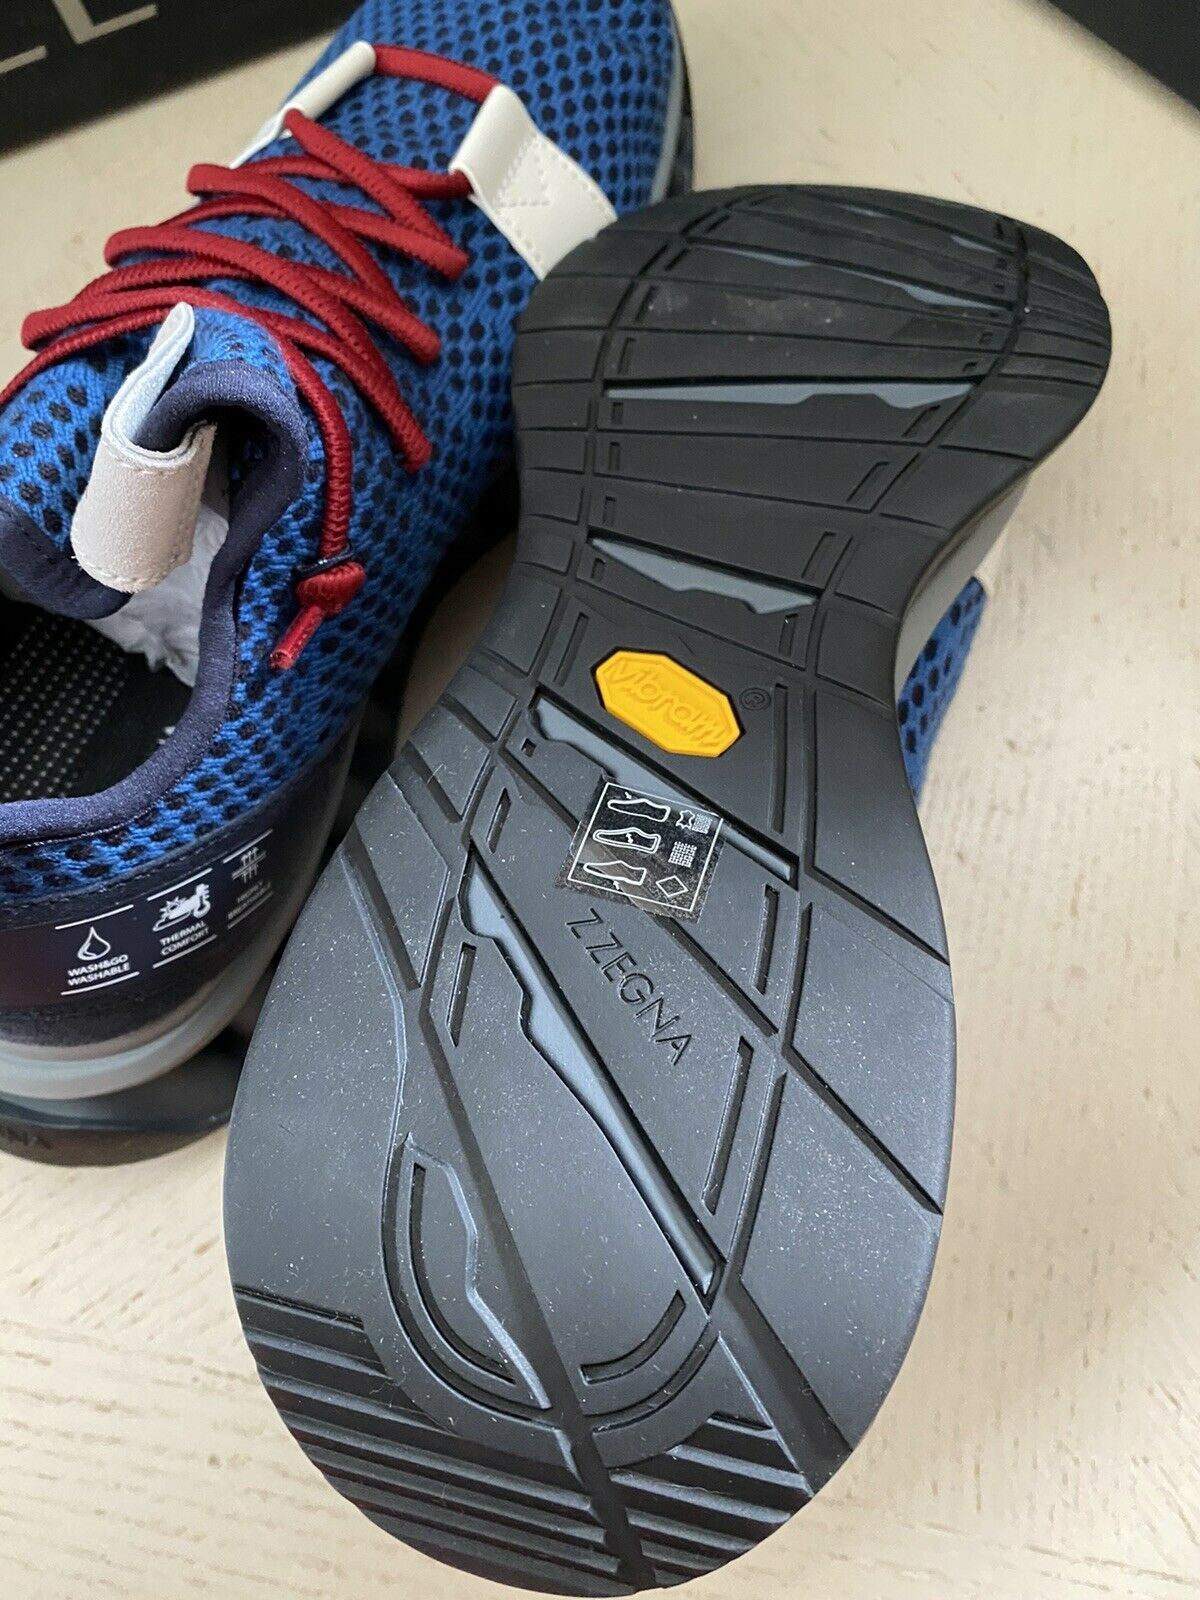 Neue 525 $ Z Zegna Sneakers Schuhe Blau/Weiß 11,5 US